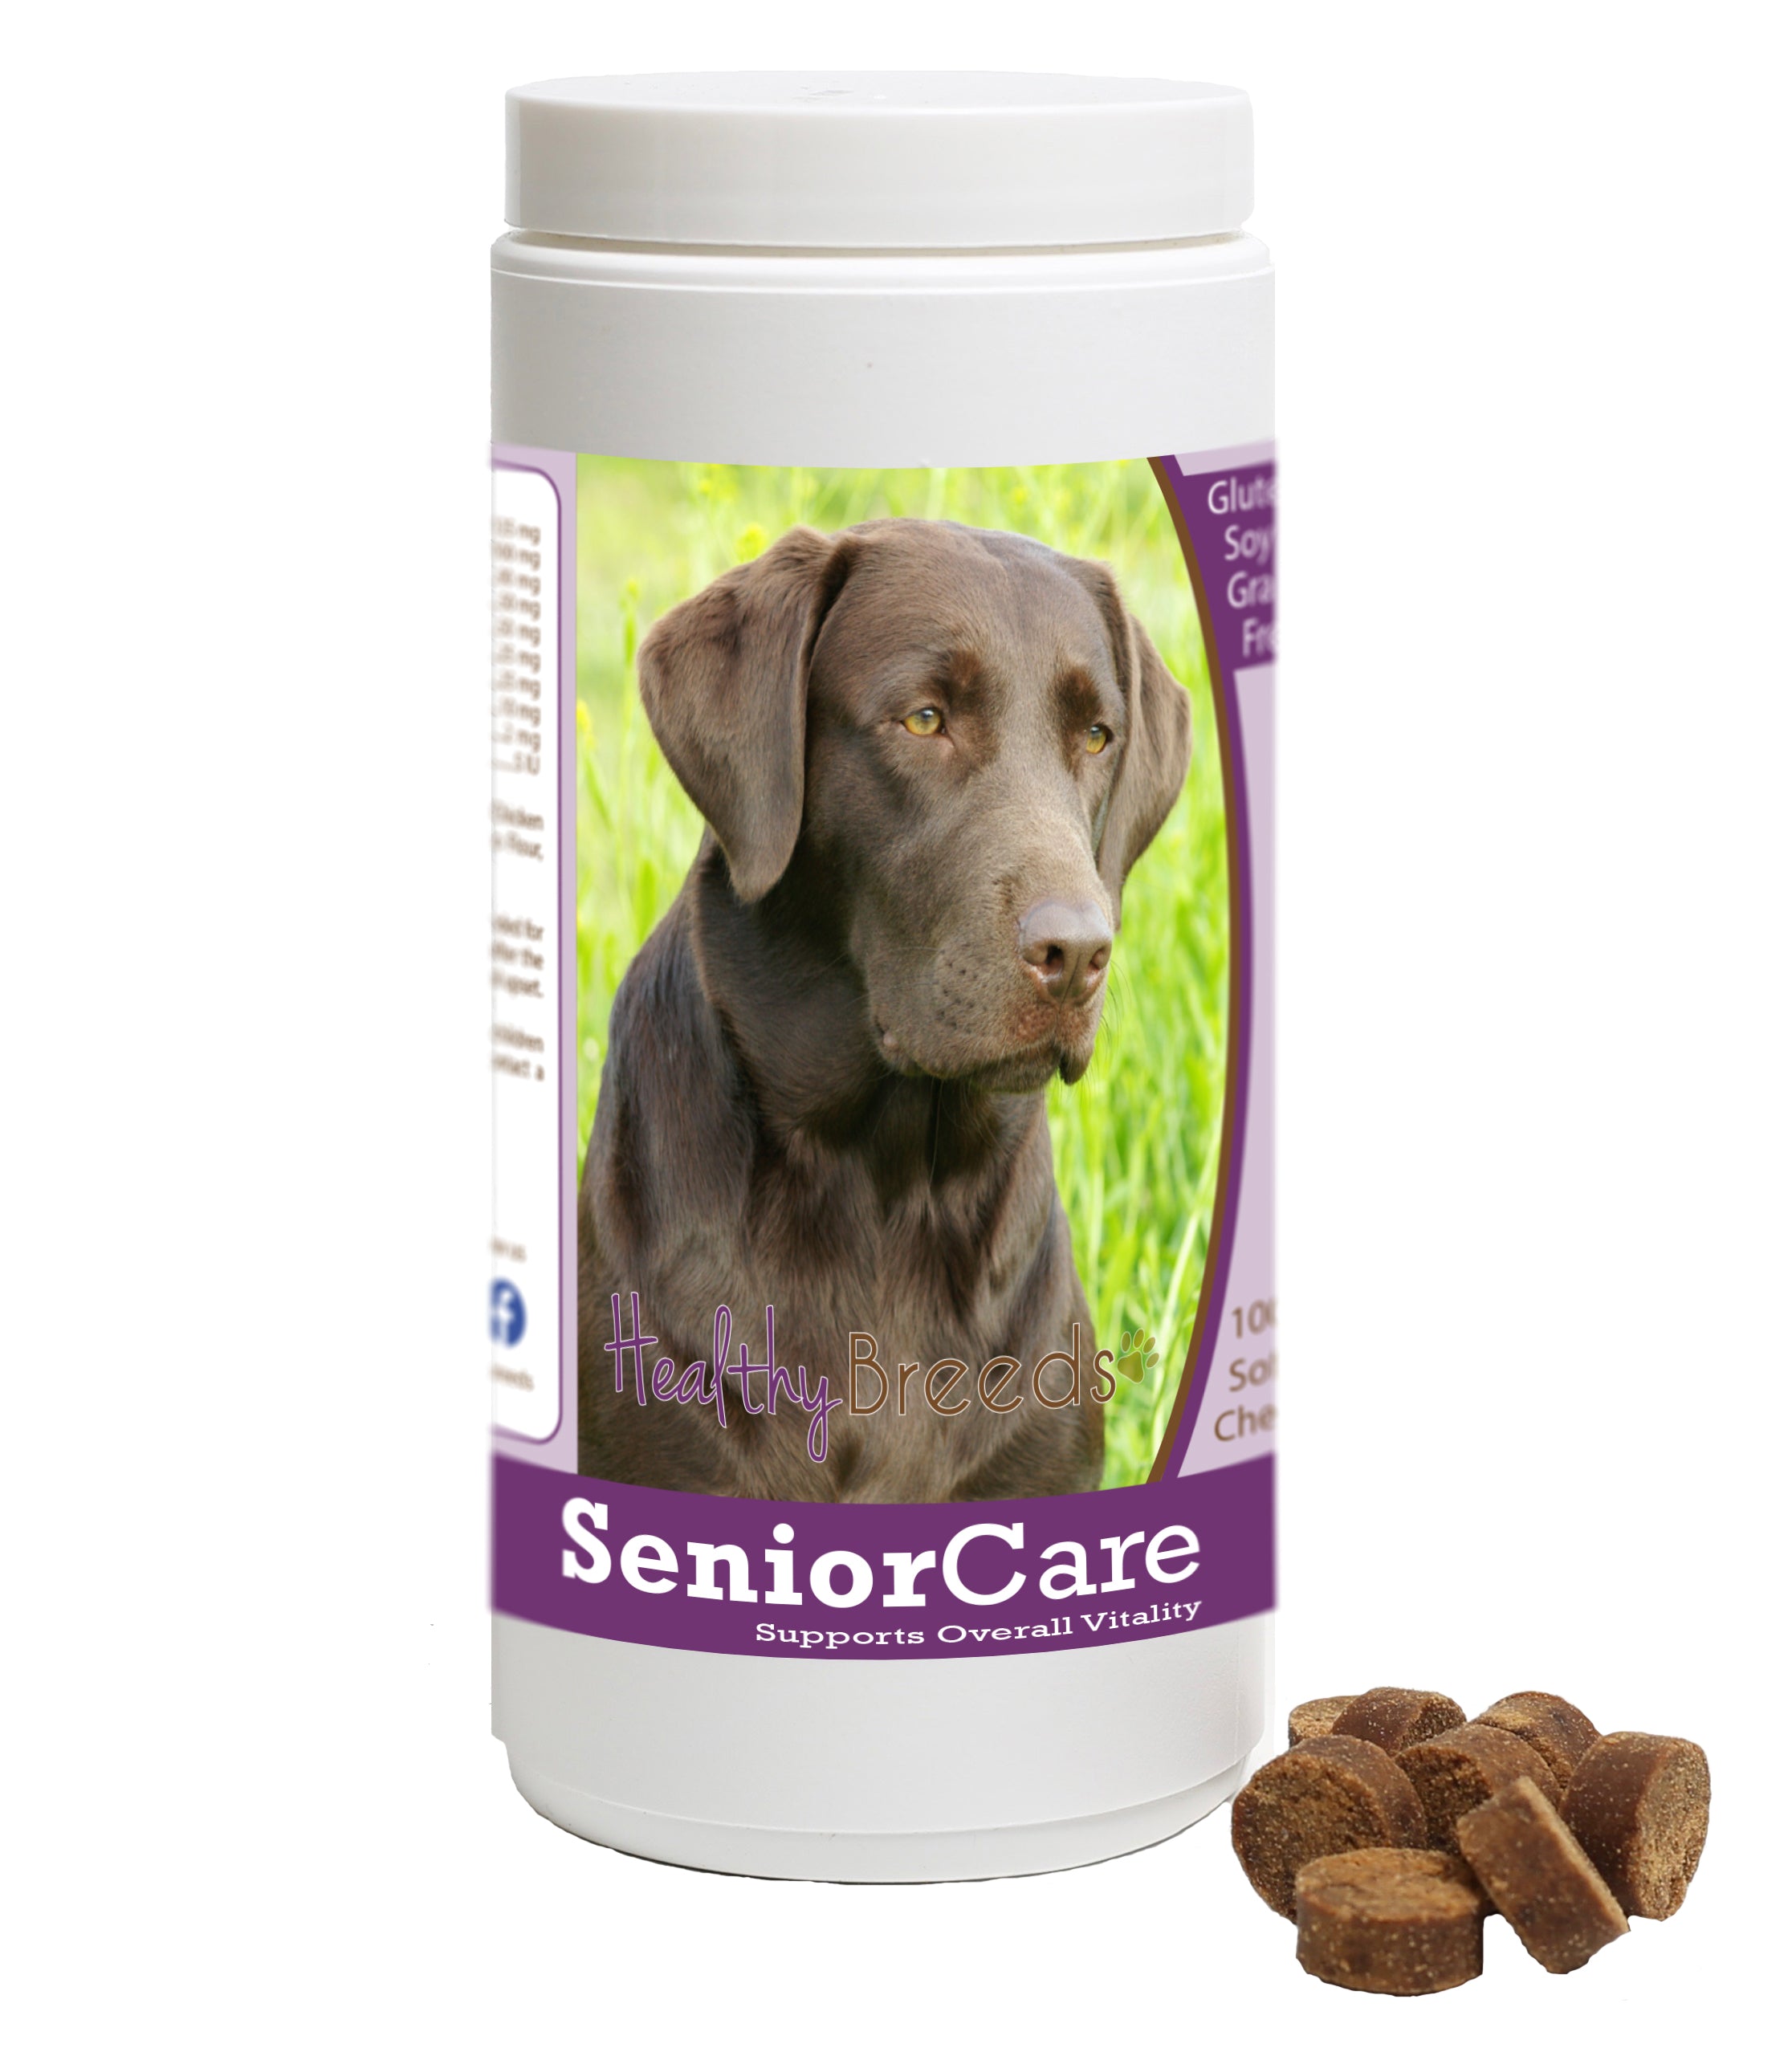 Healthy Breeds Senior Dog Care Soft Chews - Pit Bull